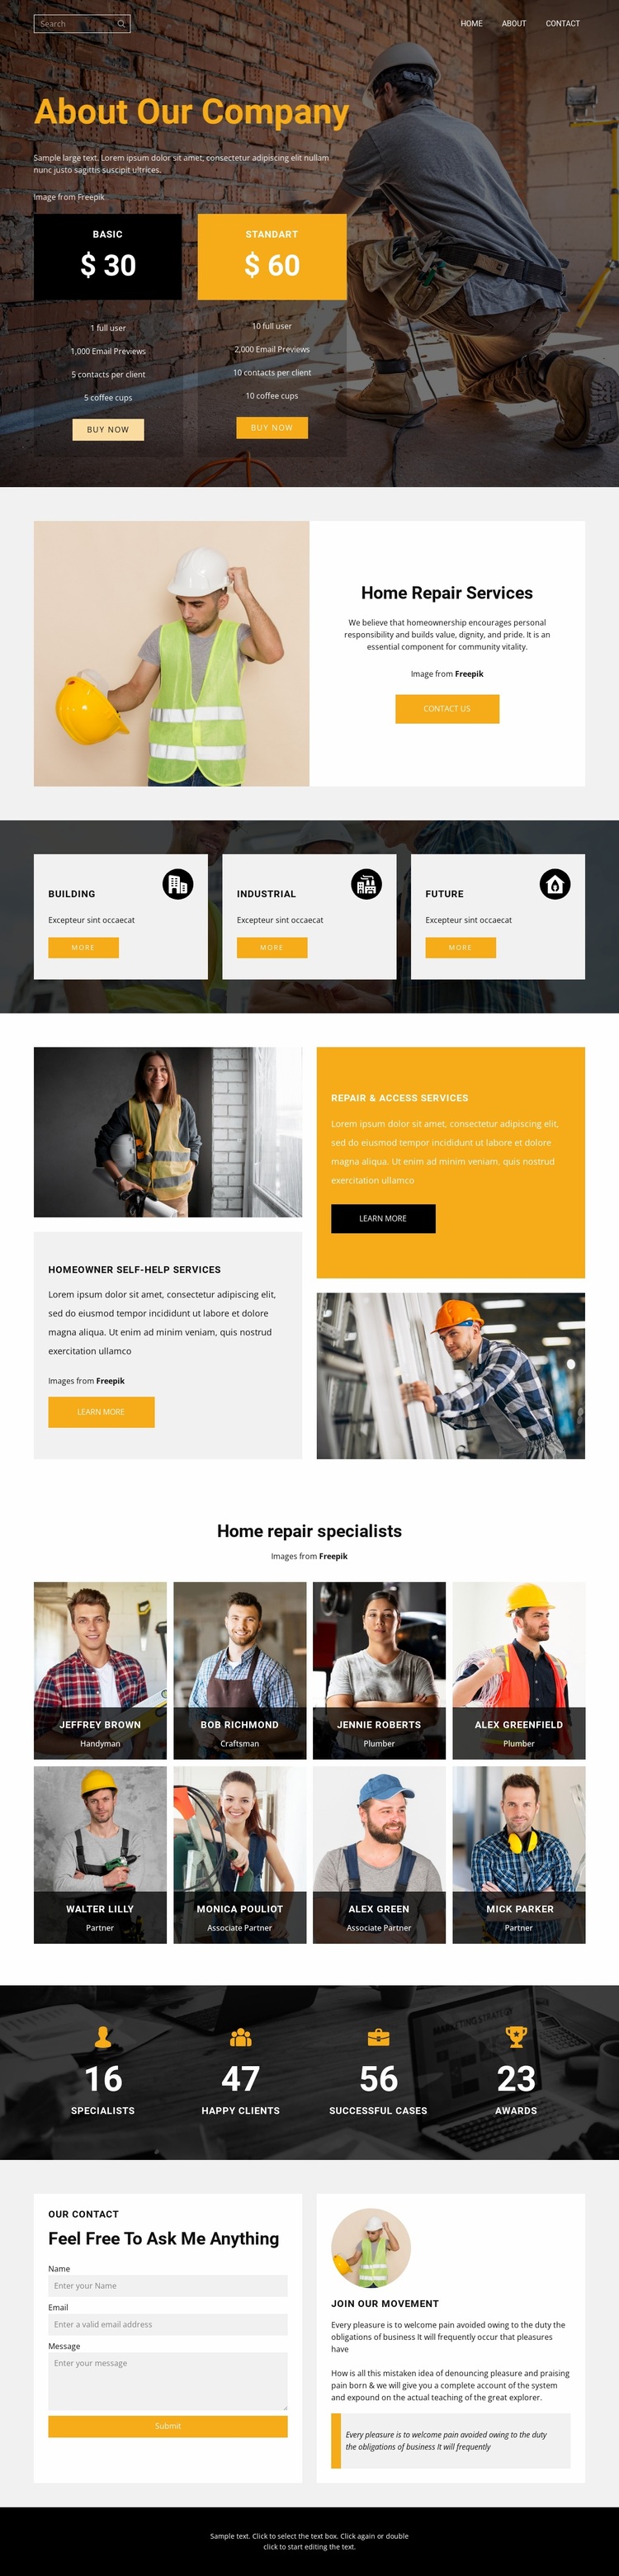 We will build a better home Website Design